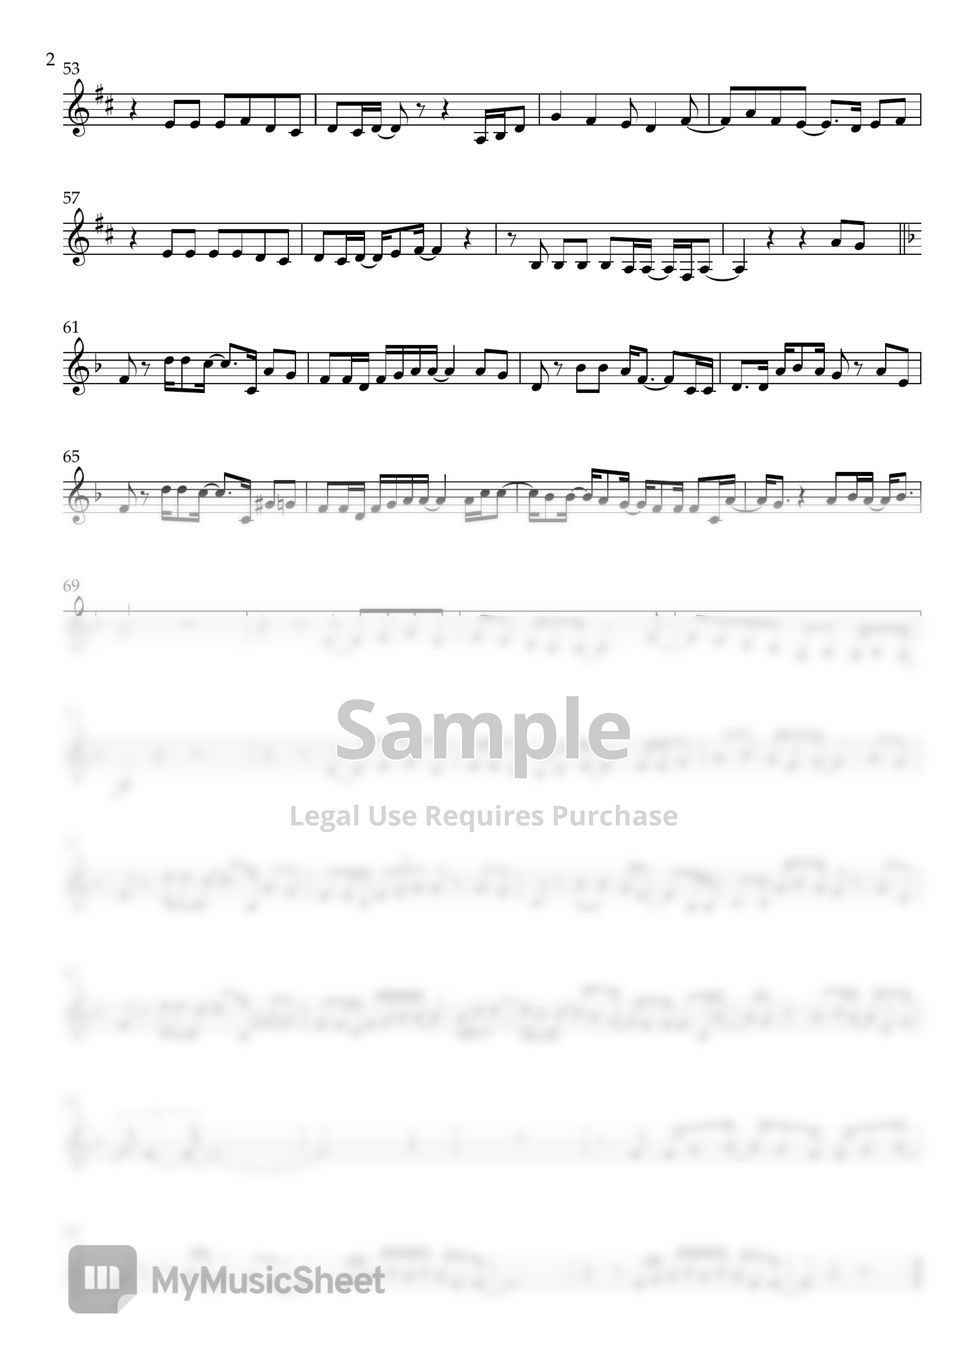 Lee Mujin - Traffic light (for Bb trumpet) by respecTRUMPET